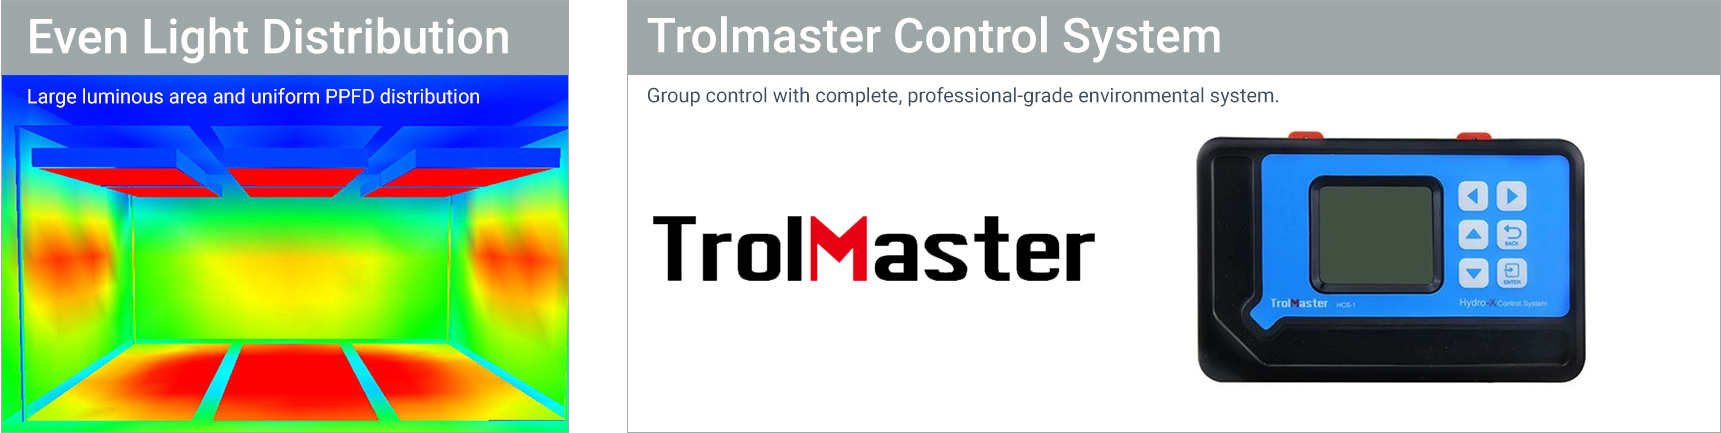 trolmaster control system even light distribution